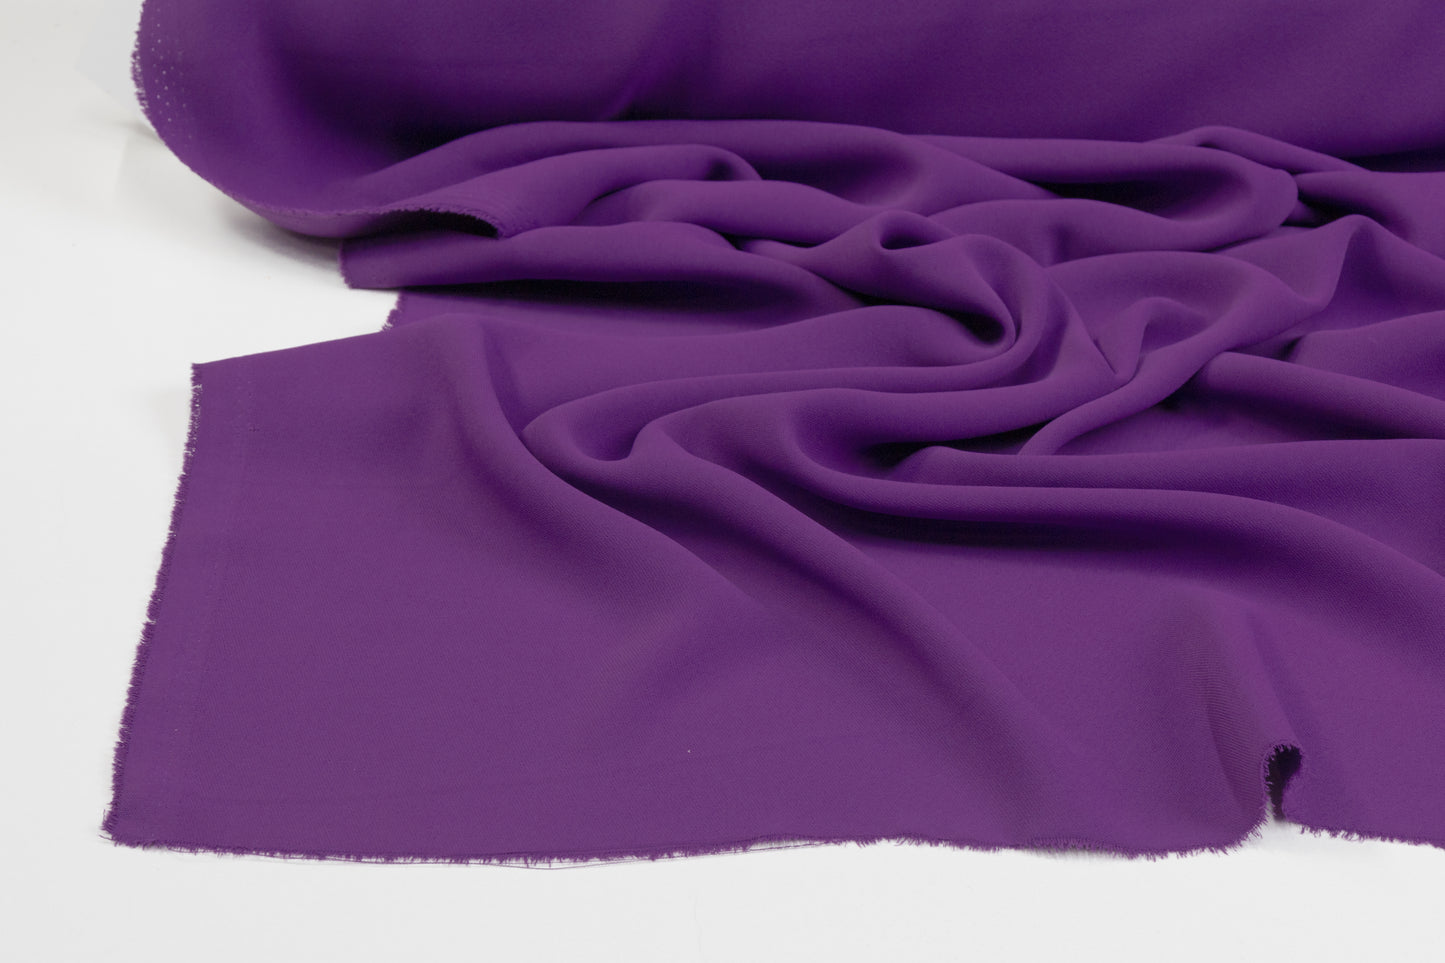 Luxe Italian Crepe - Purple